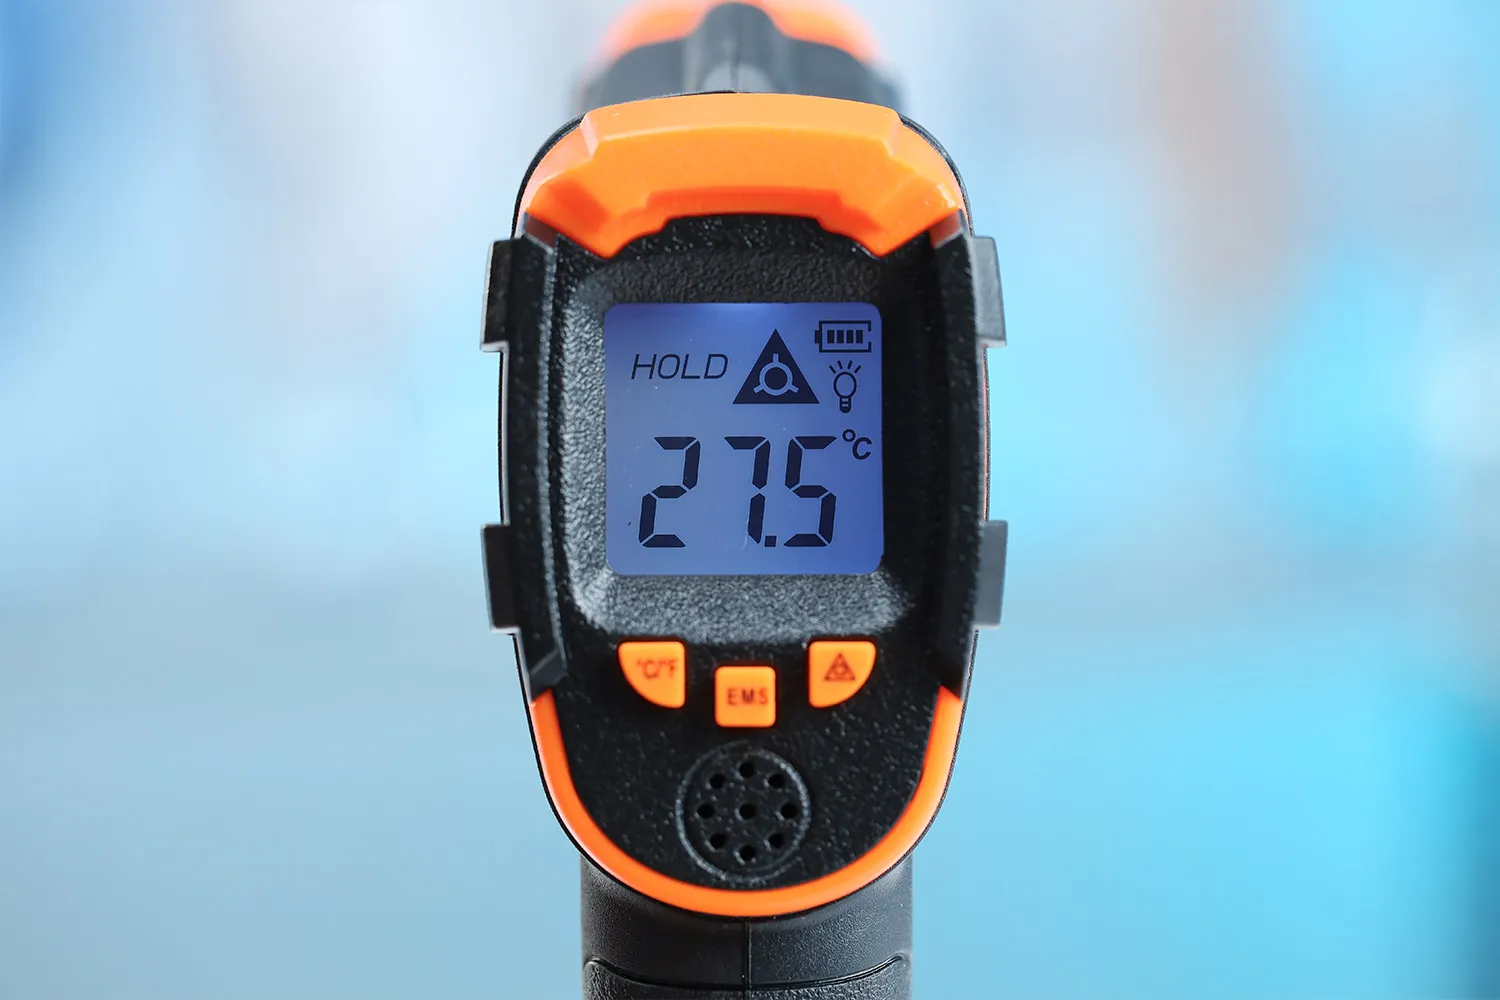 Kizen Infrared Thermometer Gun - Laserpro Lp300 Digital